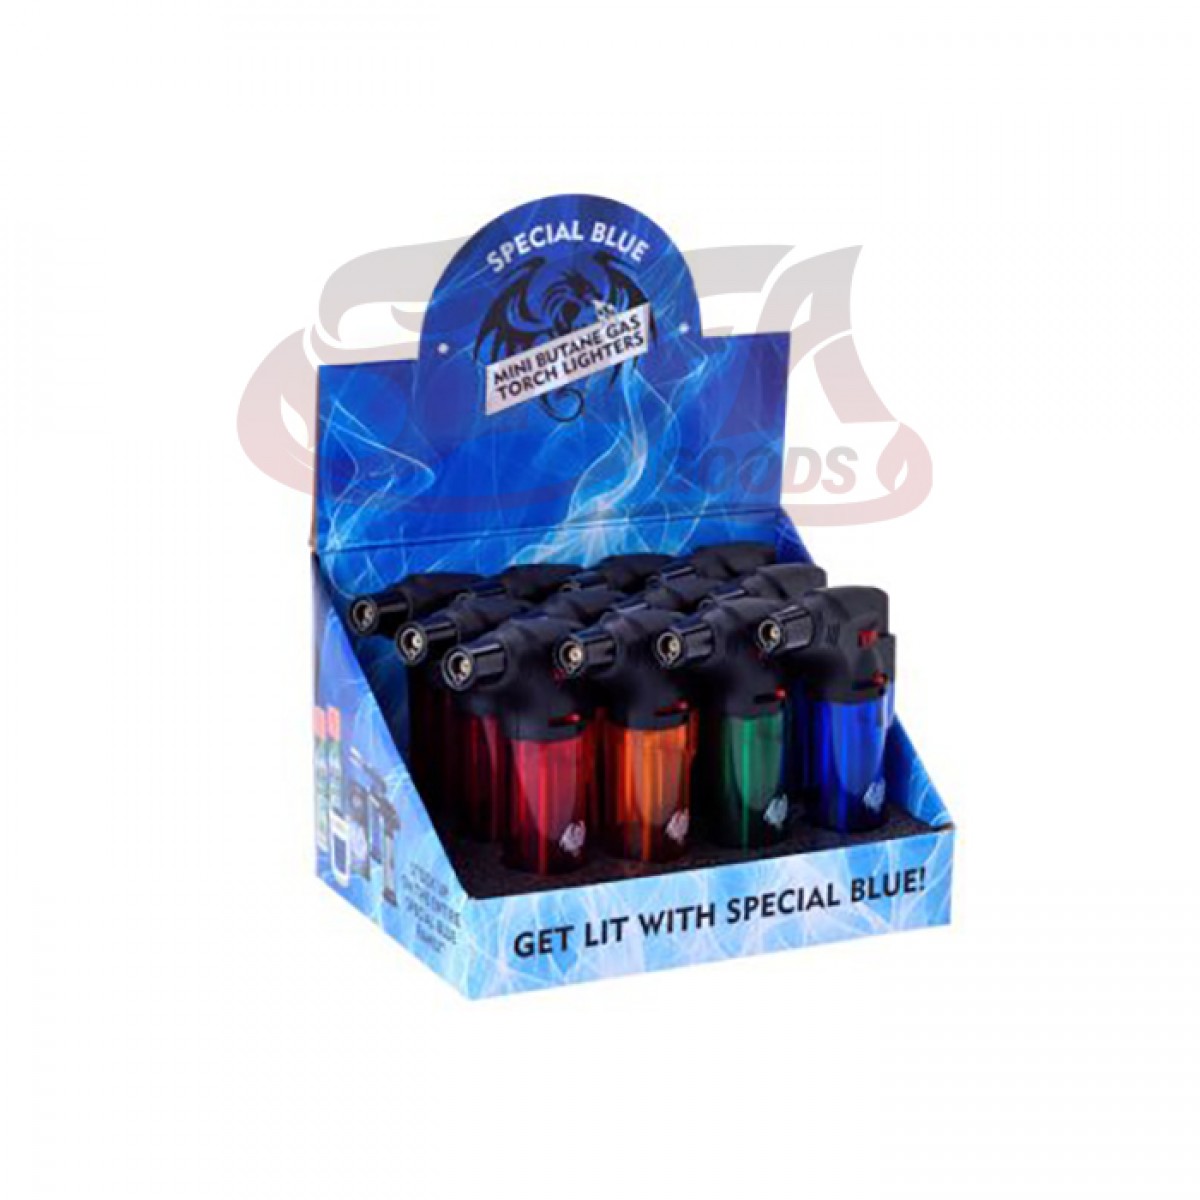 Special Blue - Bernie Plastic Lighters - 12PC Display